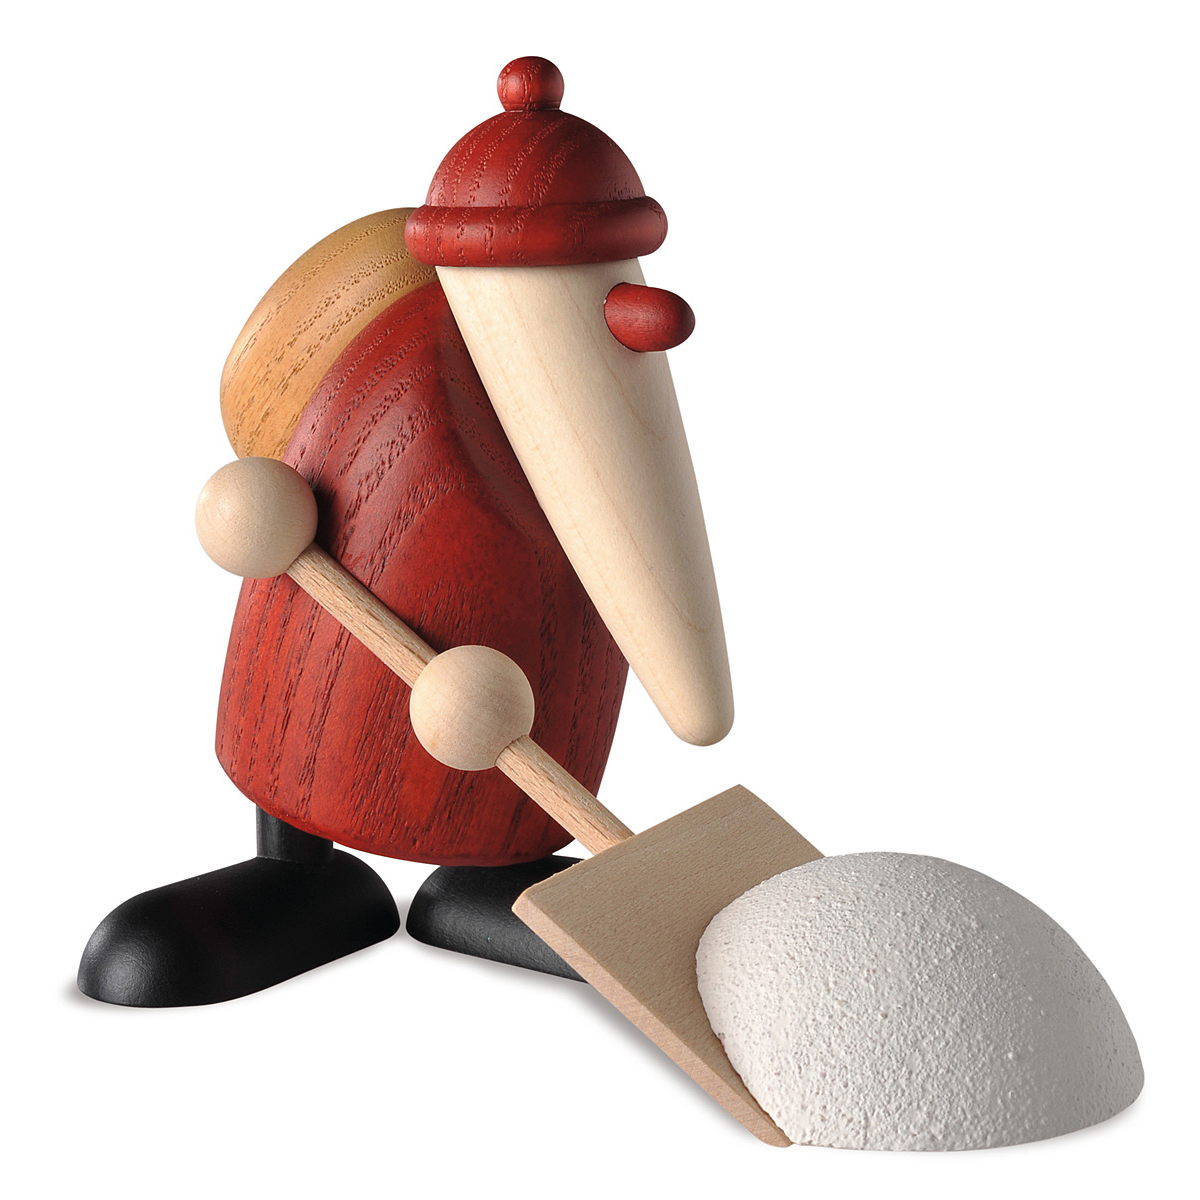  Santa Claus holding a snow shovel, small